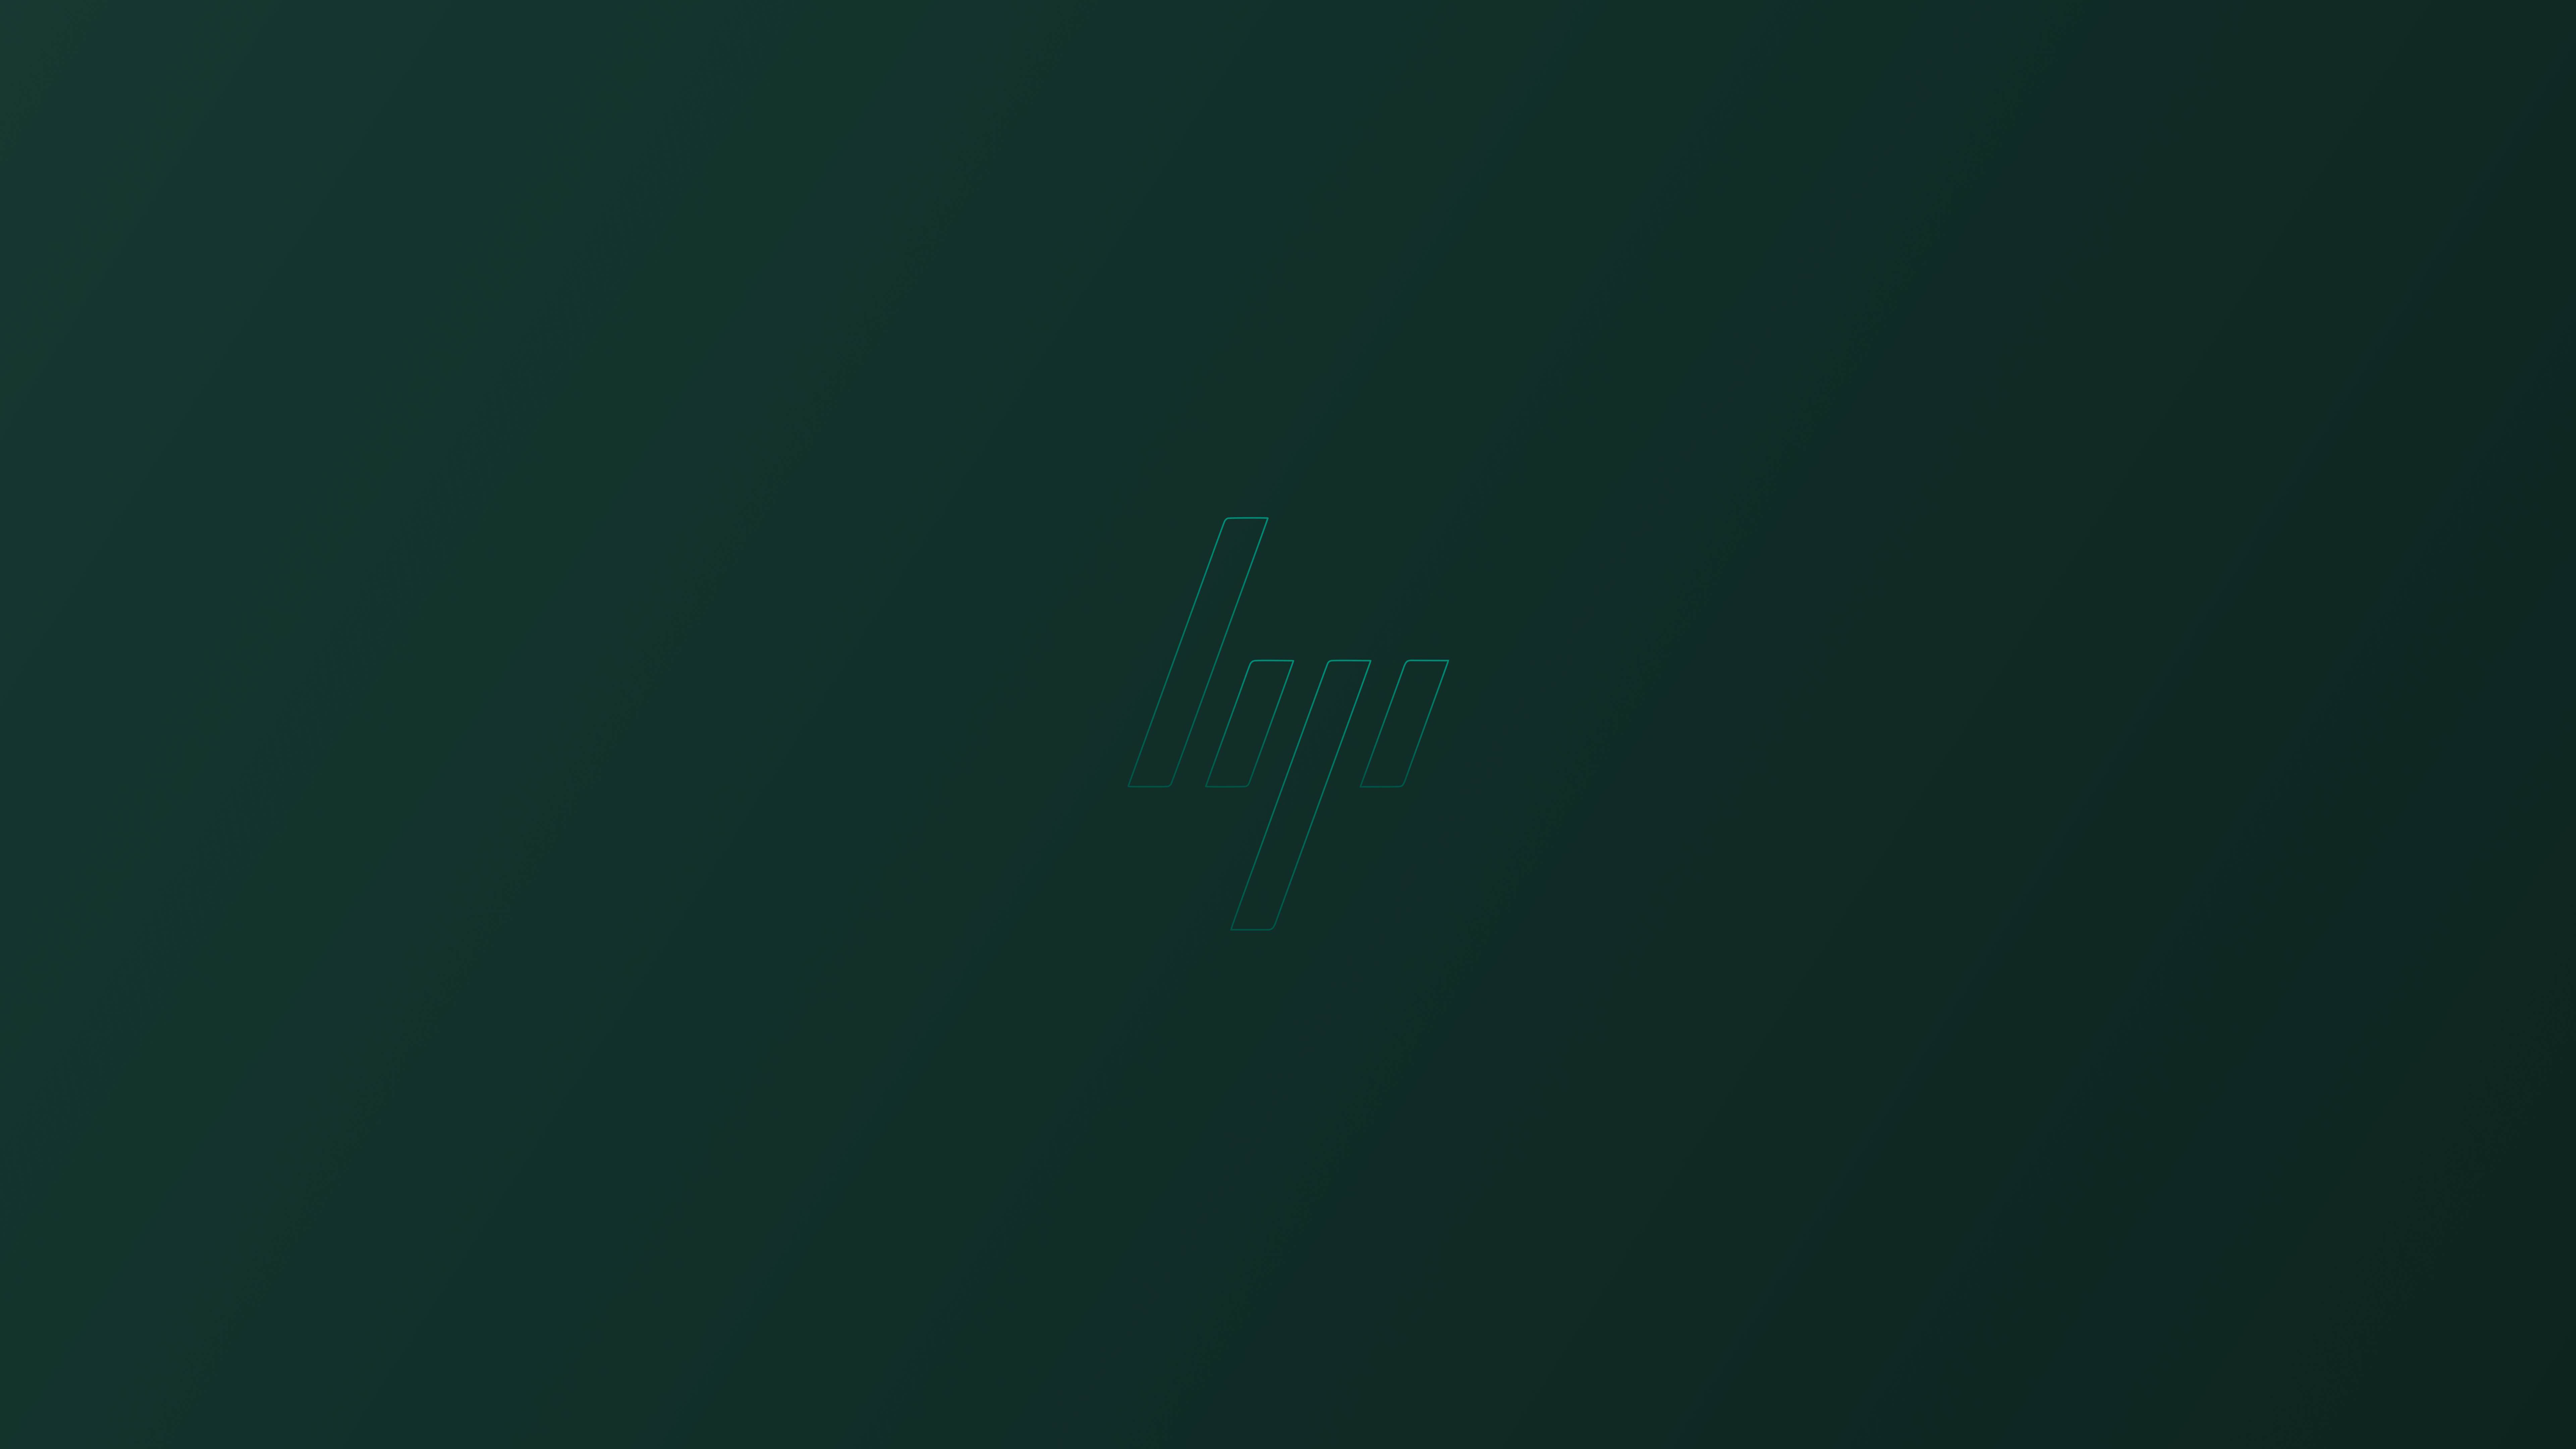 General 7680x4320 Hewlett Packard brand logo green background simple background green digital art minimalism